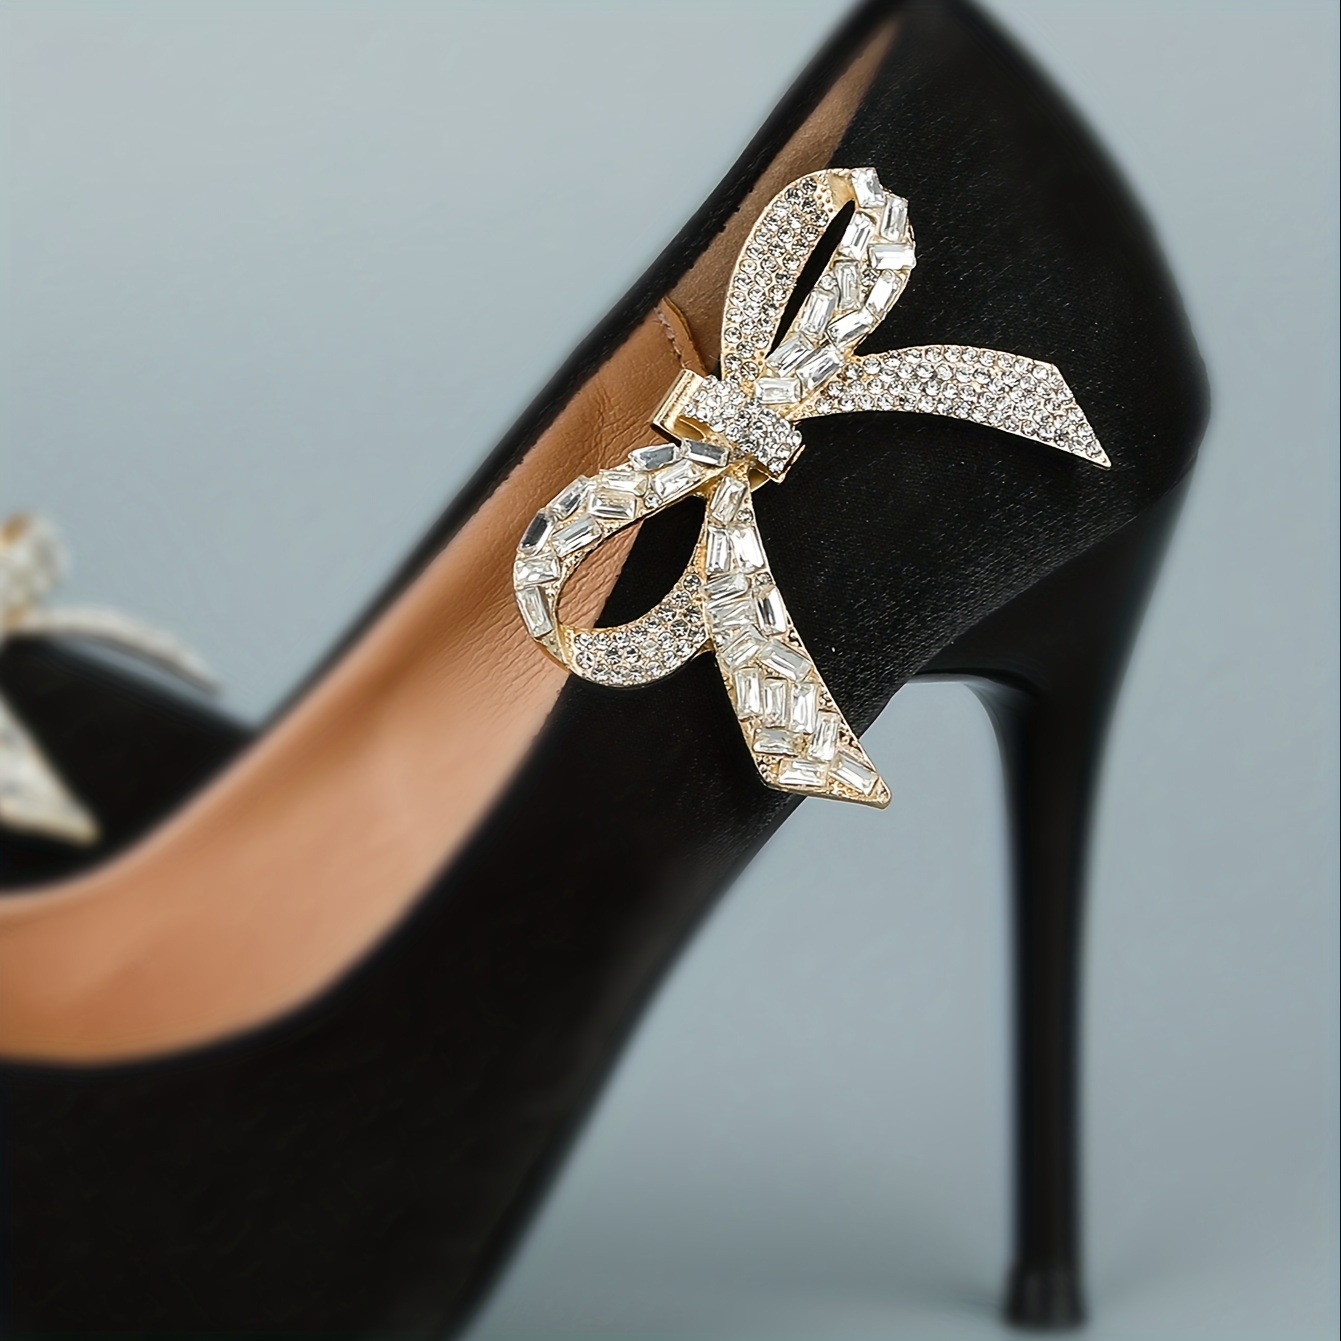 Bow Rhinestone Shoe Clips Detachable Women Shoe Accessories